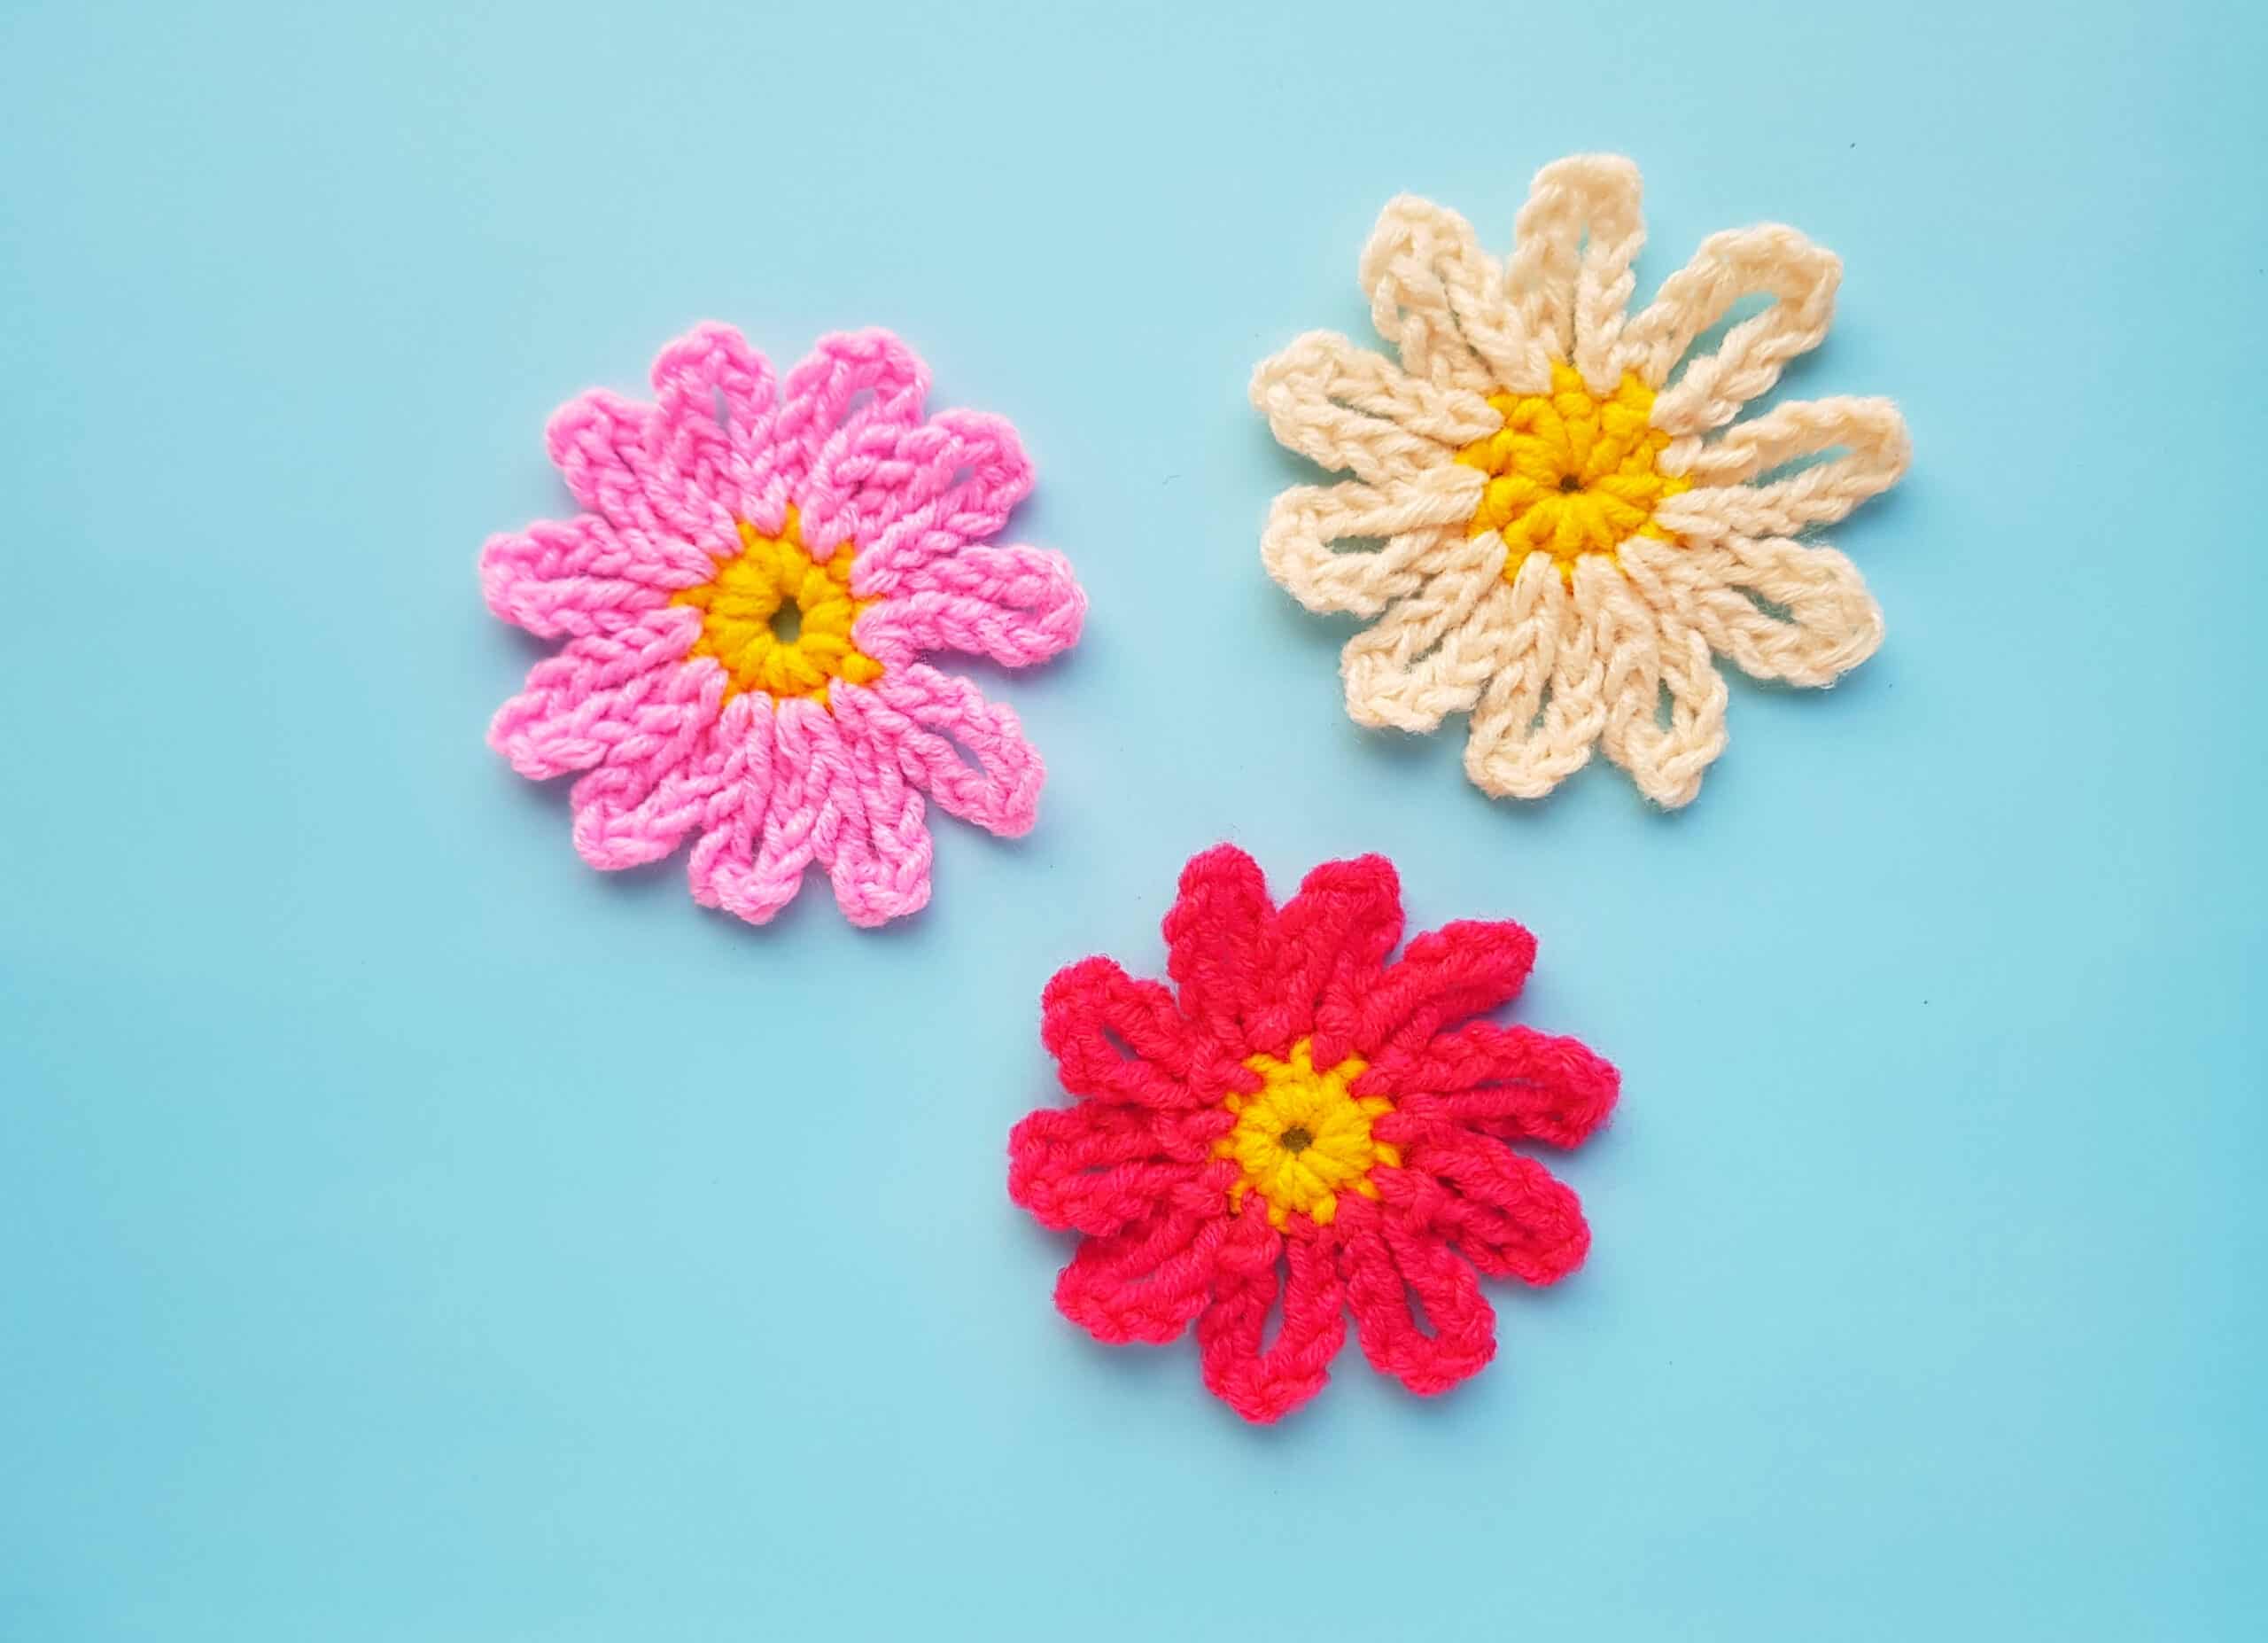 How To Make Crochet Flower Petals